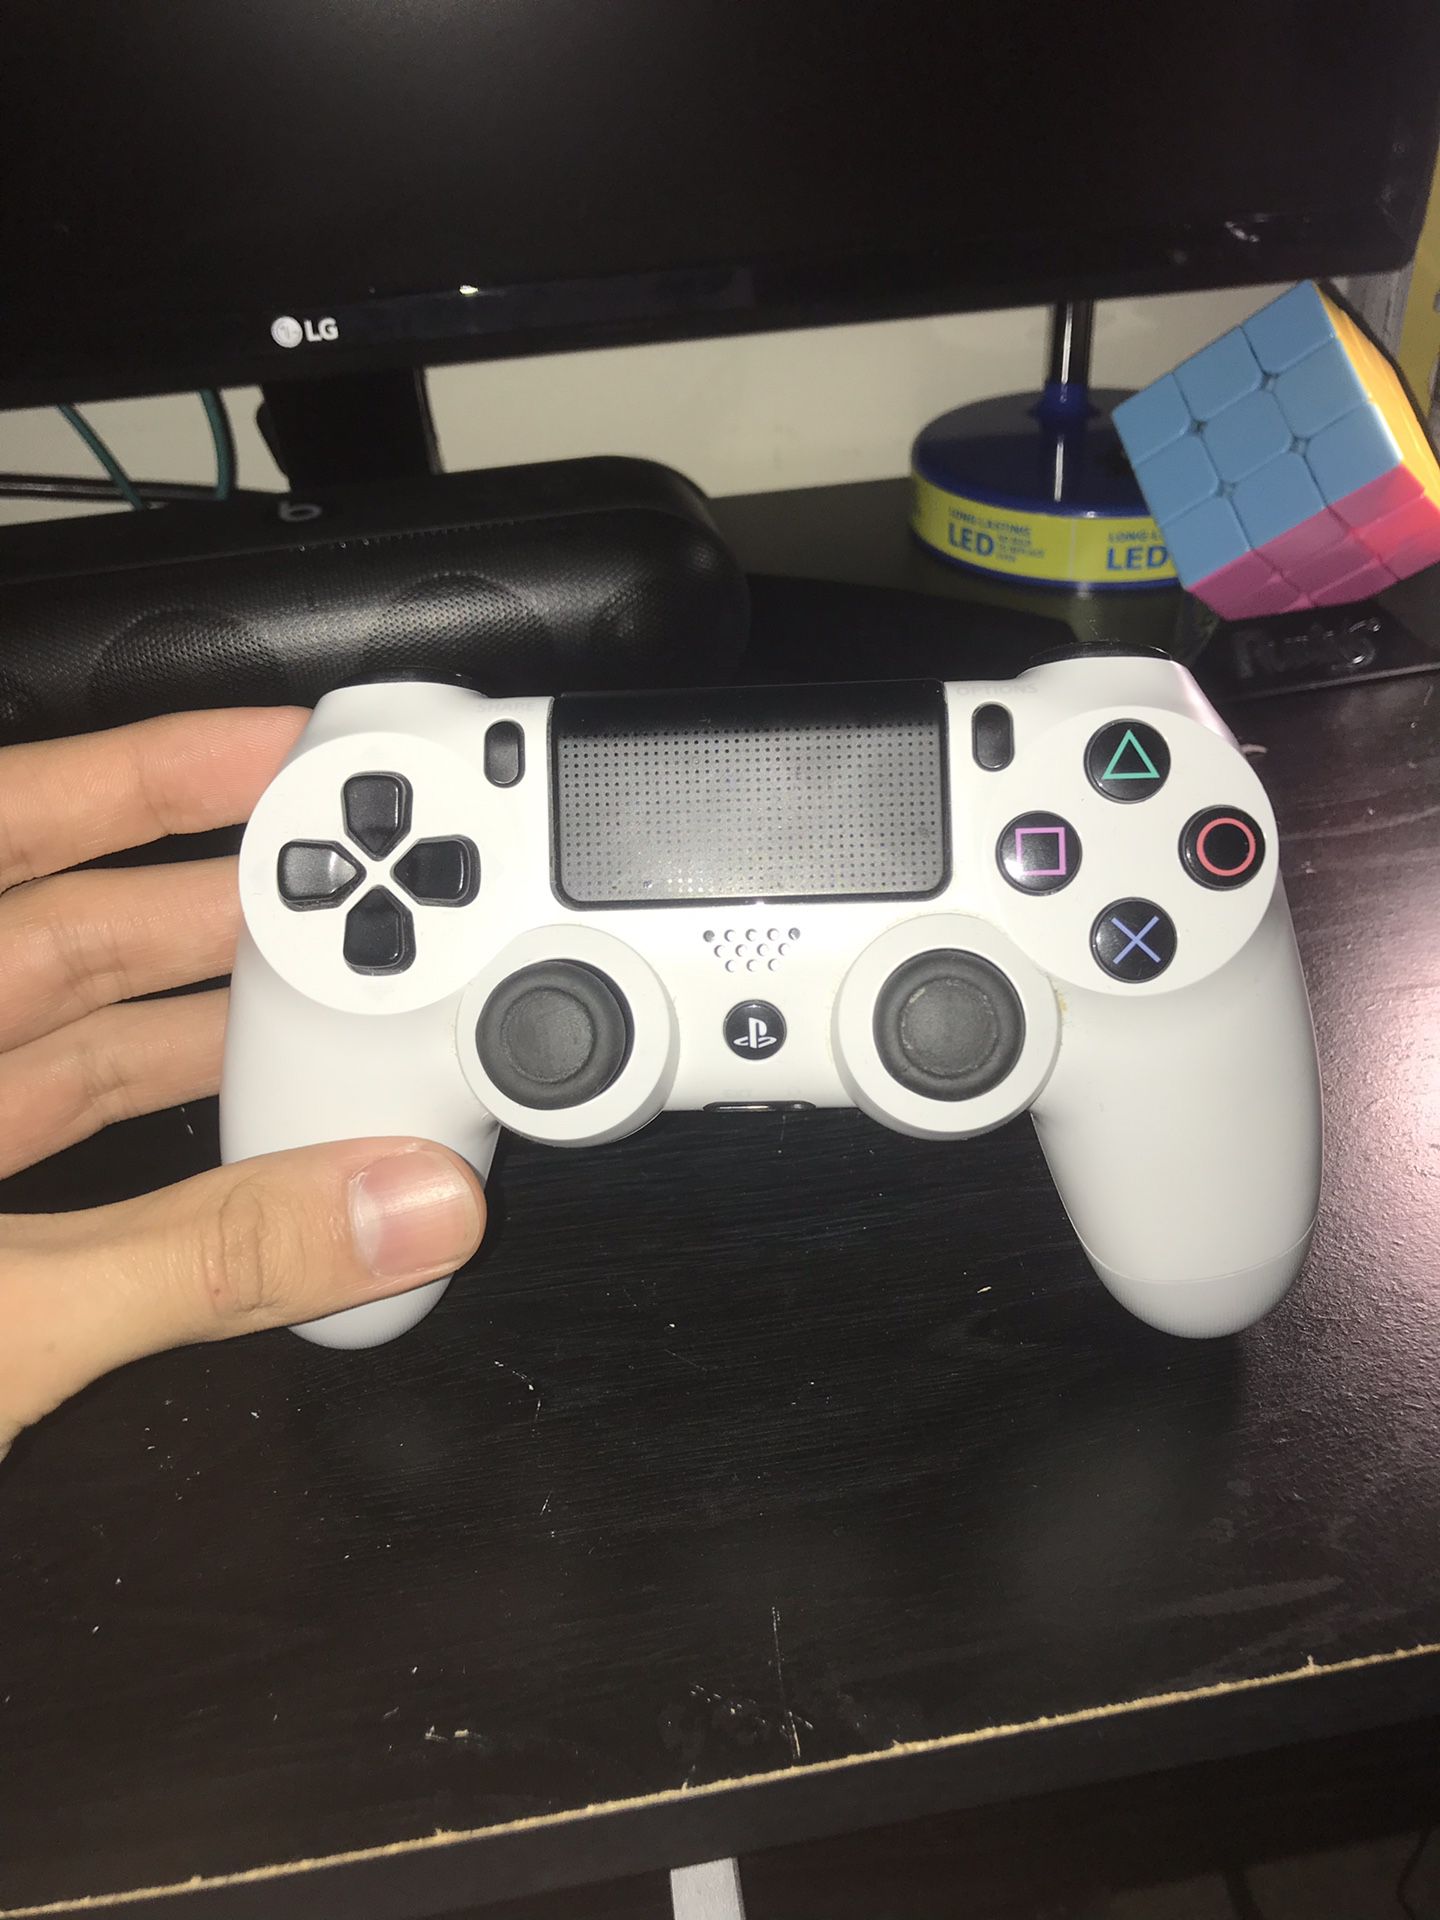 White PS4 Controller